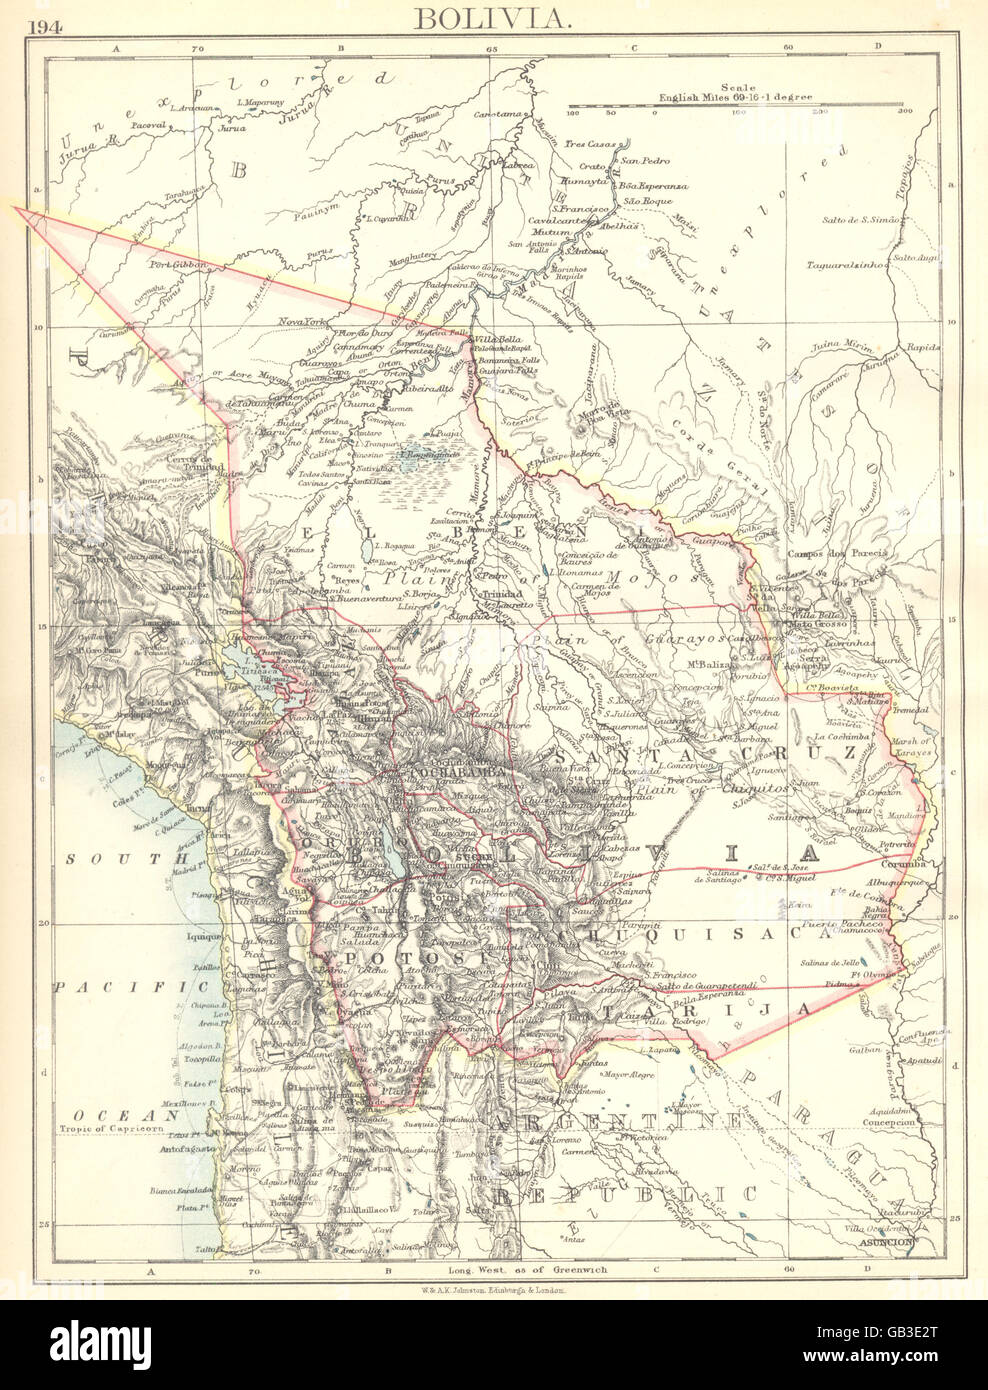 BOLIVIA: Bolivia map, 1897 Stock Photo